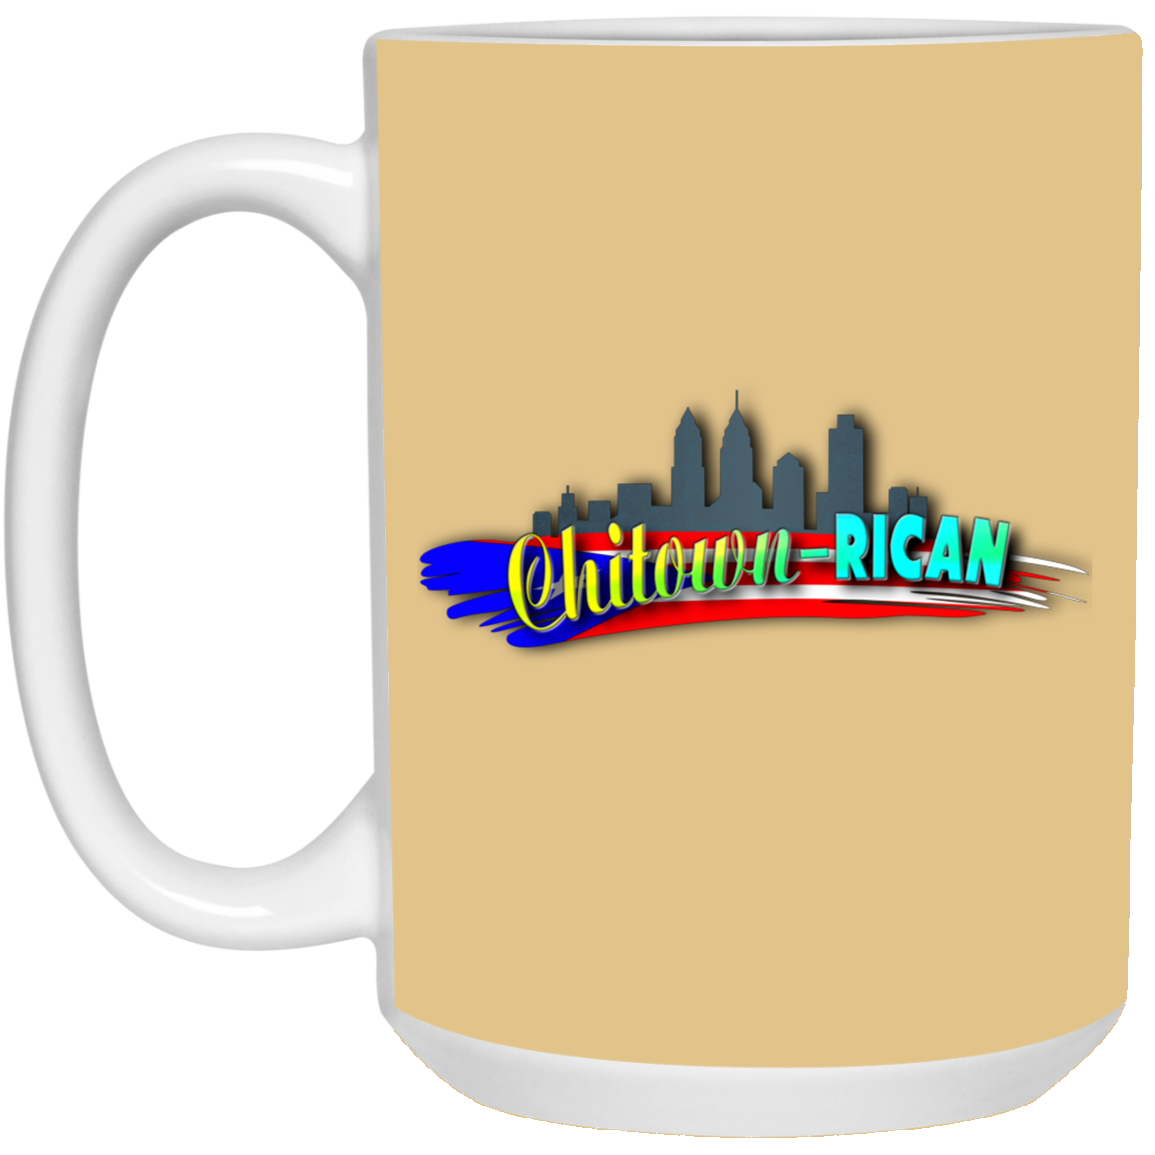 Chitown-Rican15 oz. White Mug - Puerto Rican Pride